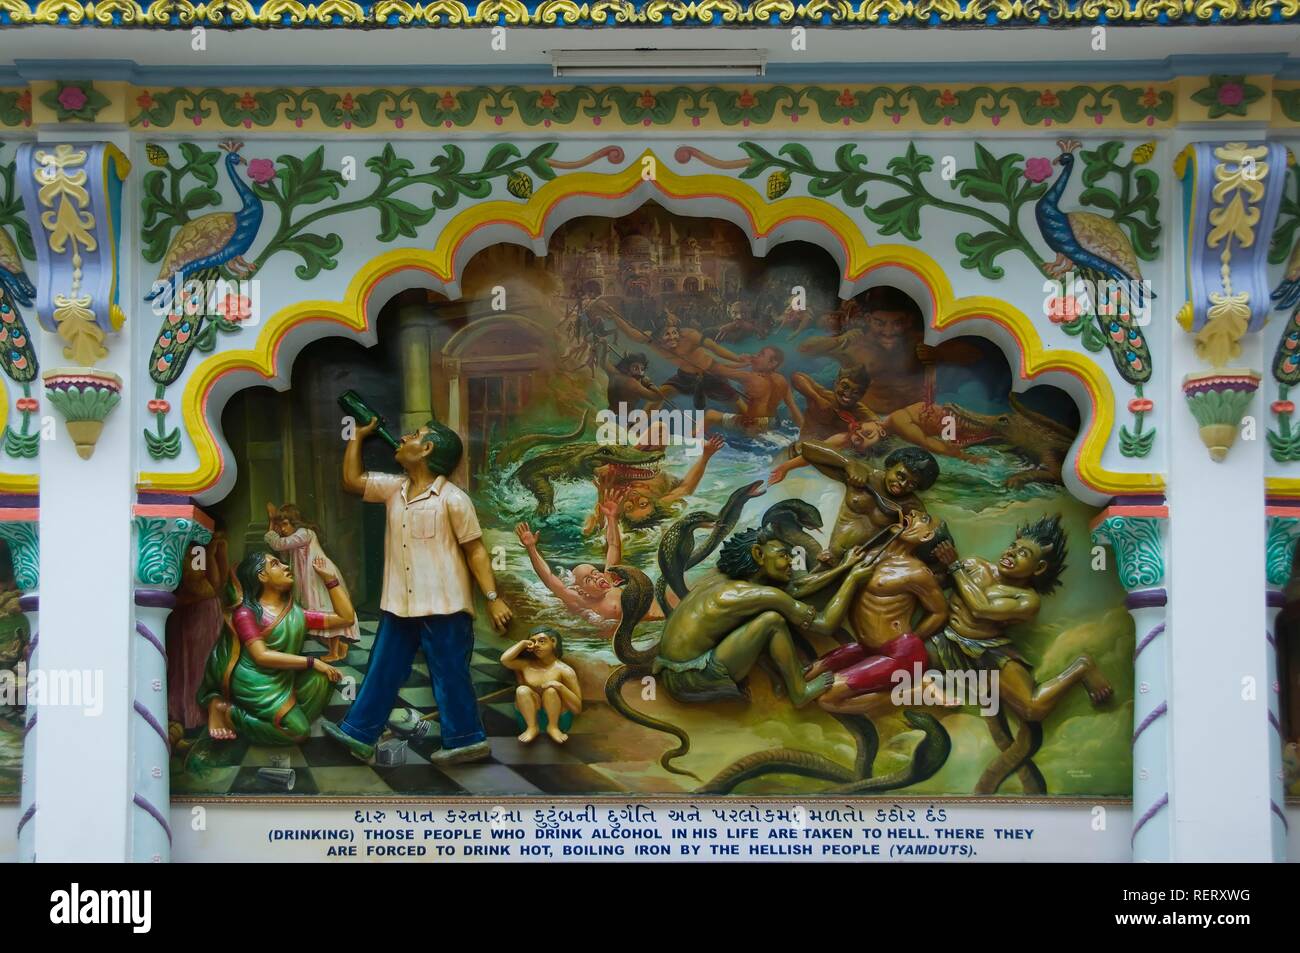 Shri Swaminarayan Mandir, tempio indù, pittura murale, scene mitologiche, Mombasa, in Kenya, Africa orientale Foto Stock